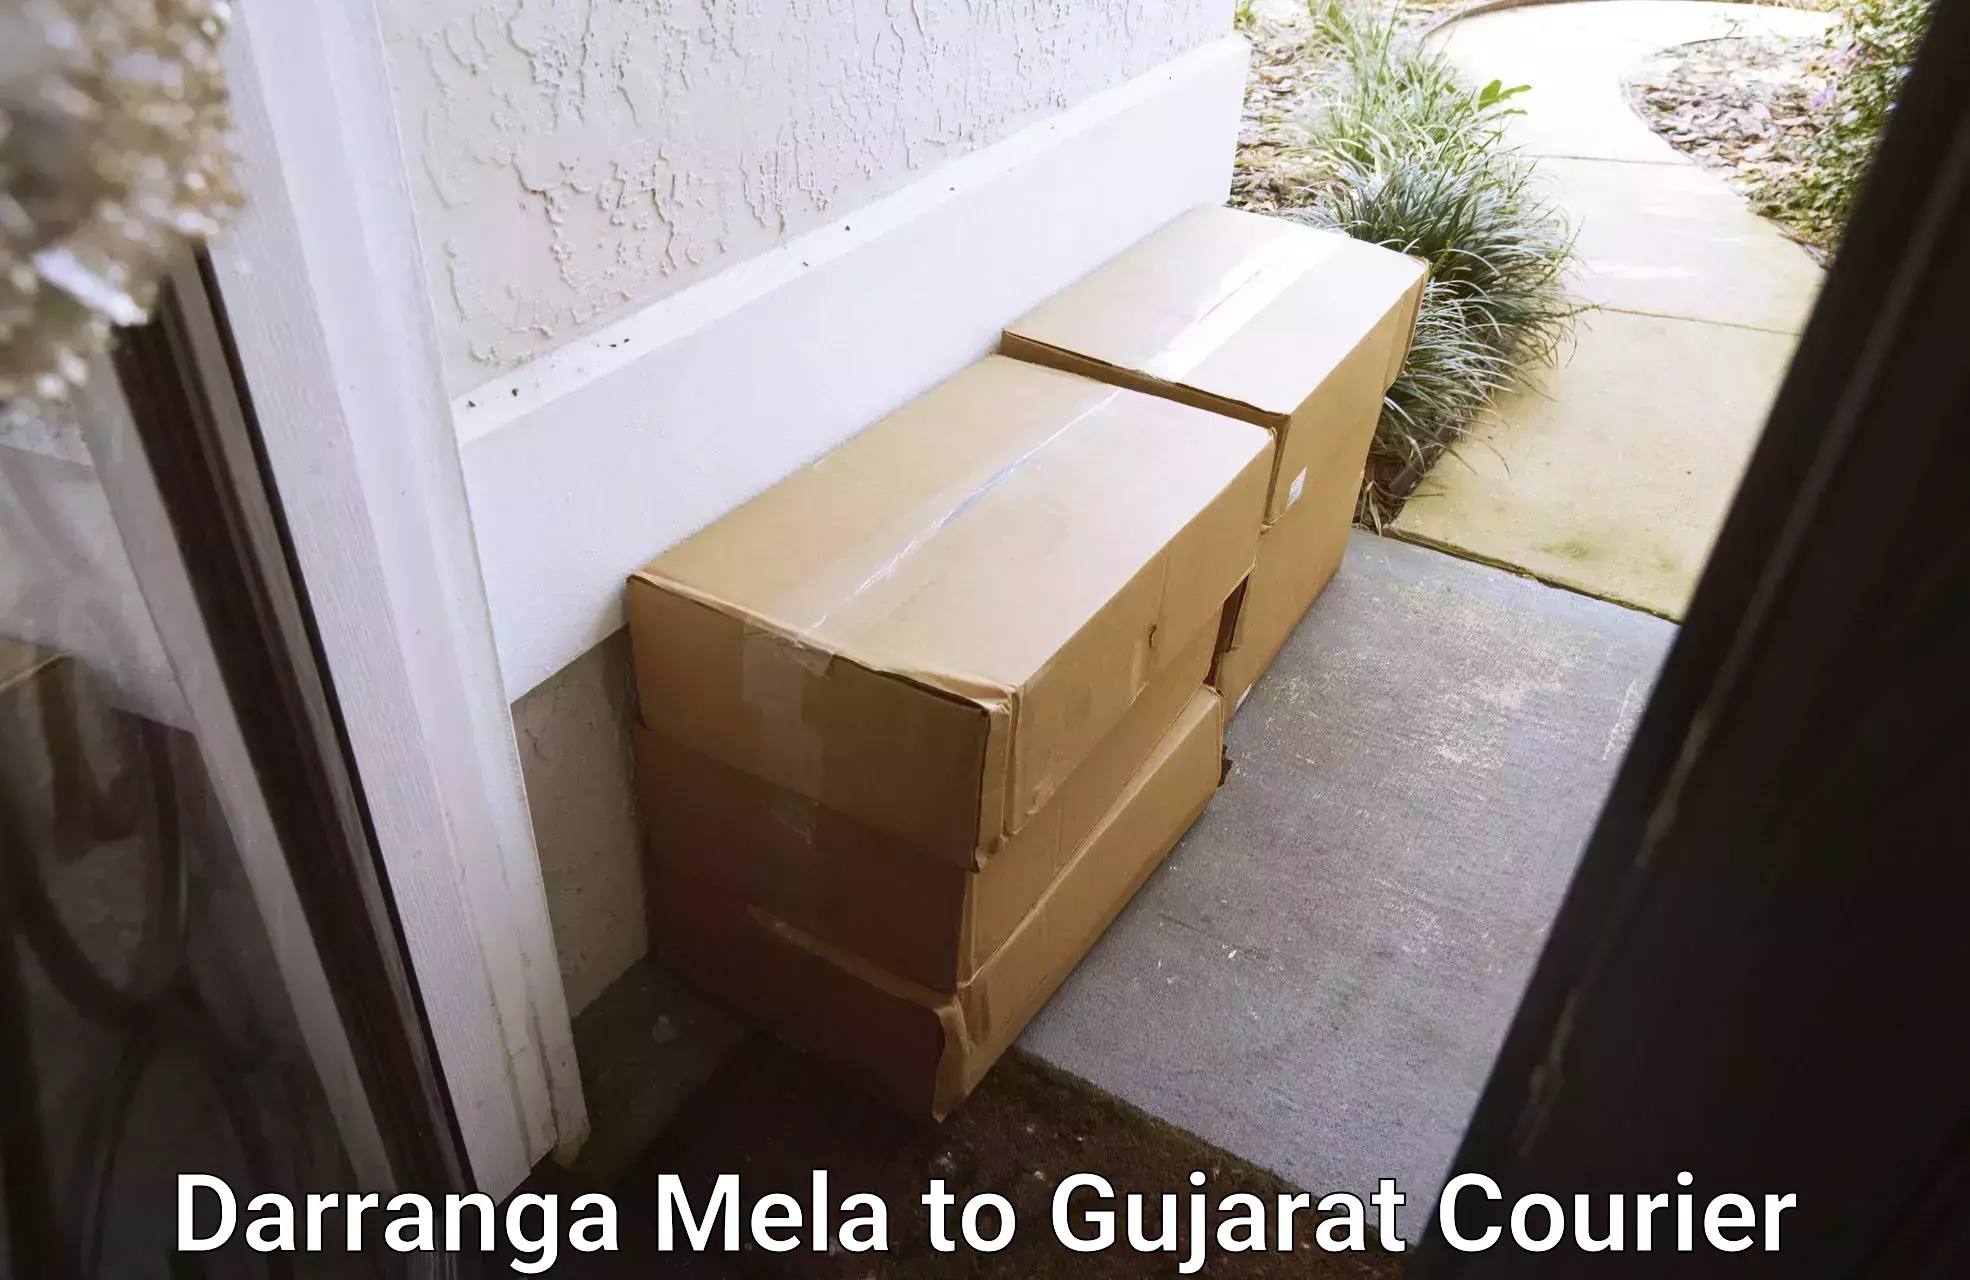 On-time delivery services Darranga Mela to Bavla